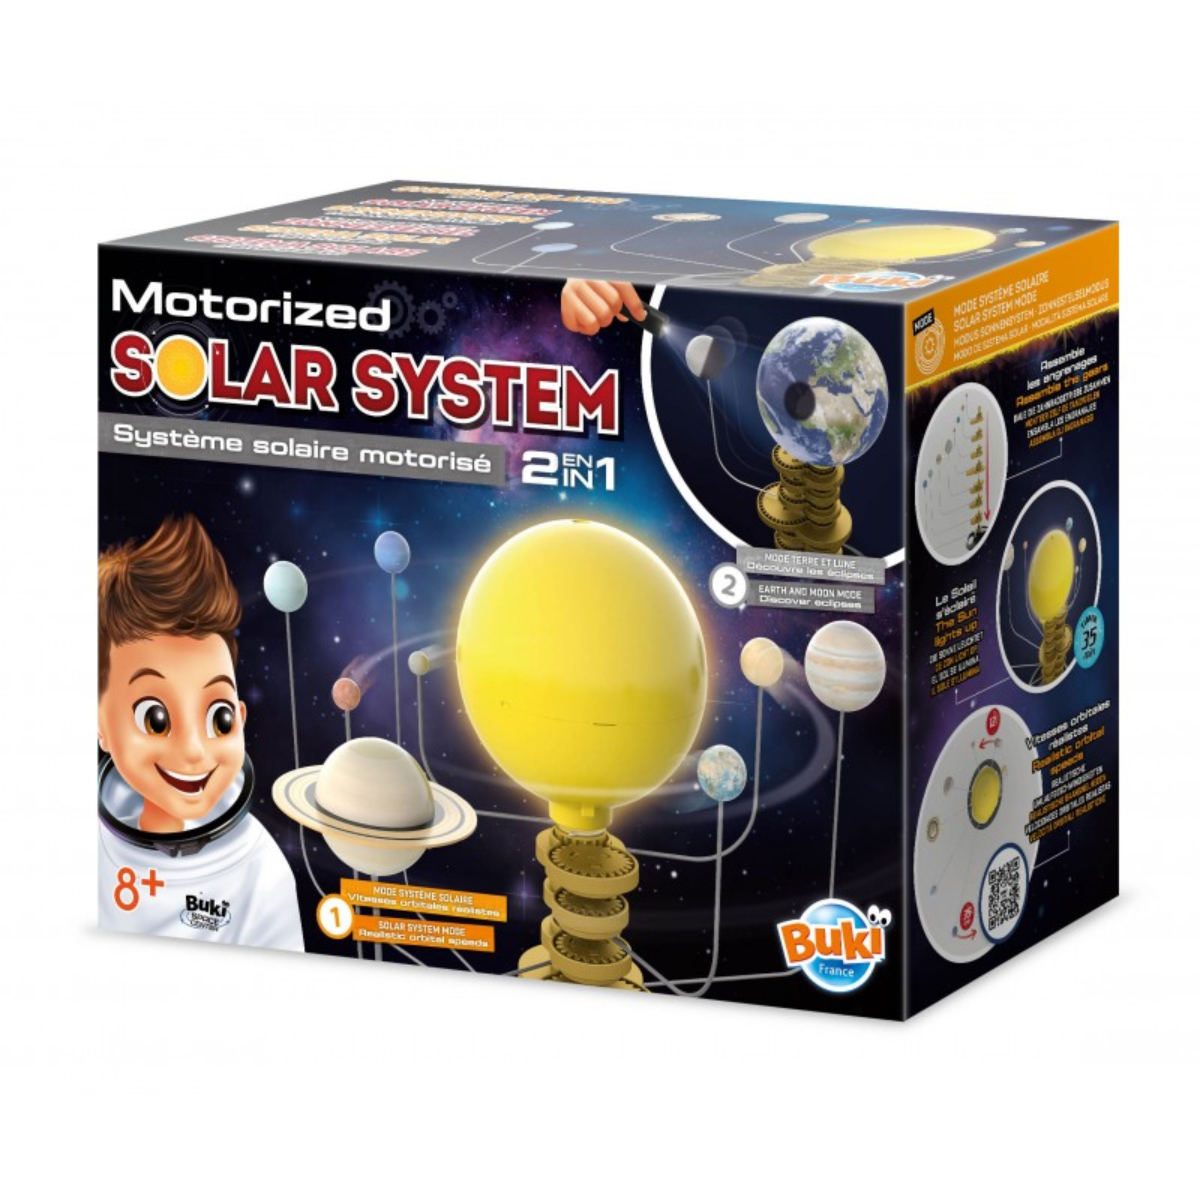 Motorized Solar System